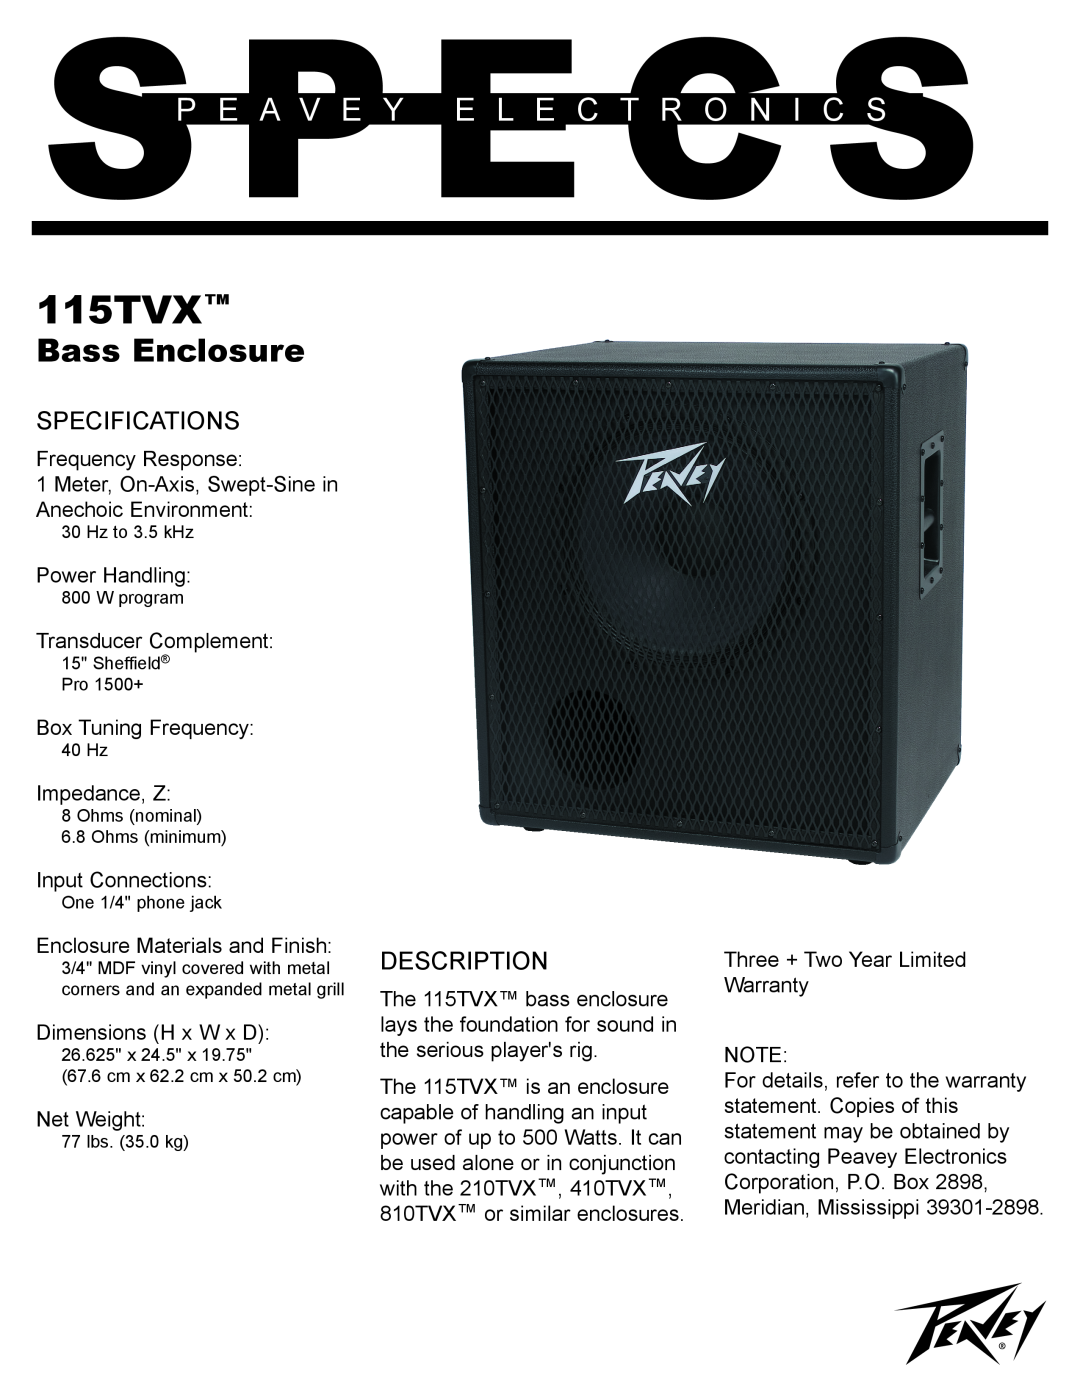 Peavey 115TVX specifications Bass Enclosure, Specifications, description 